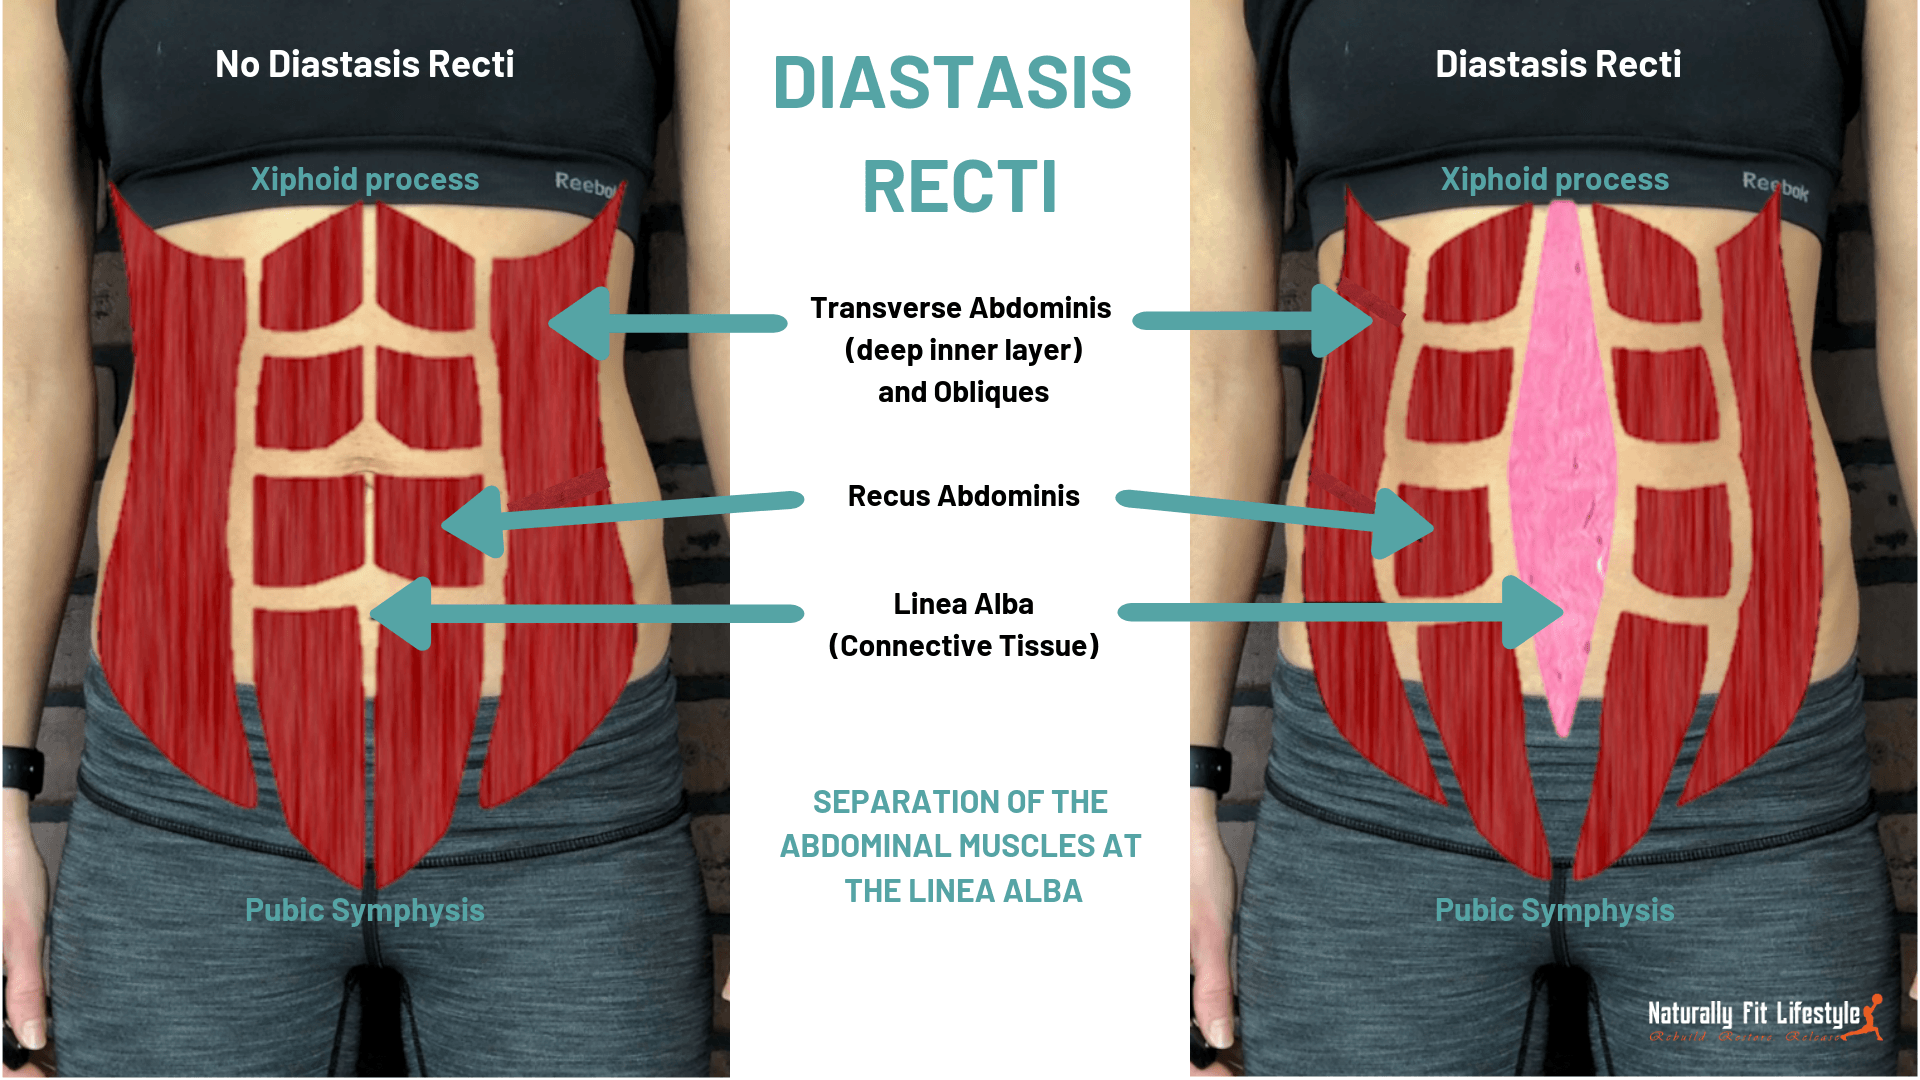 Latest Scientific Research on Diastasis Recti - The Belle Method